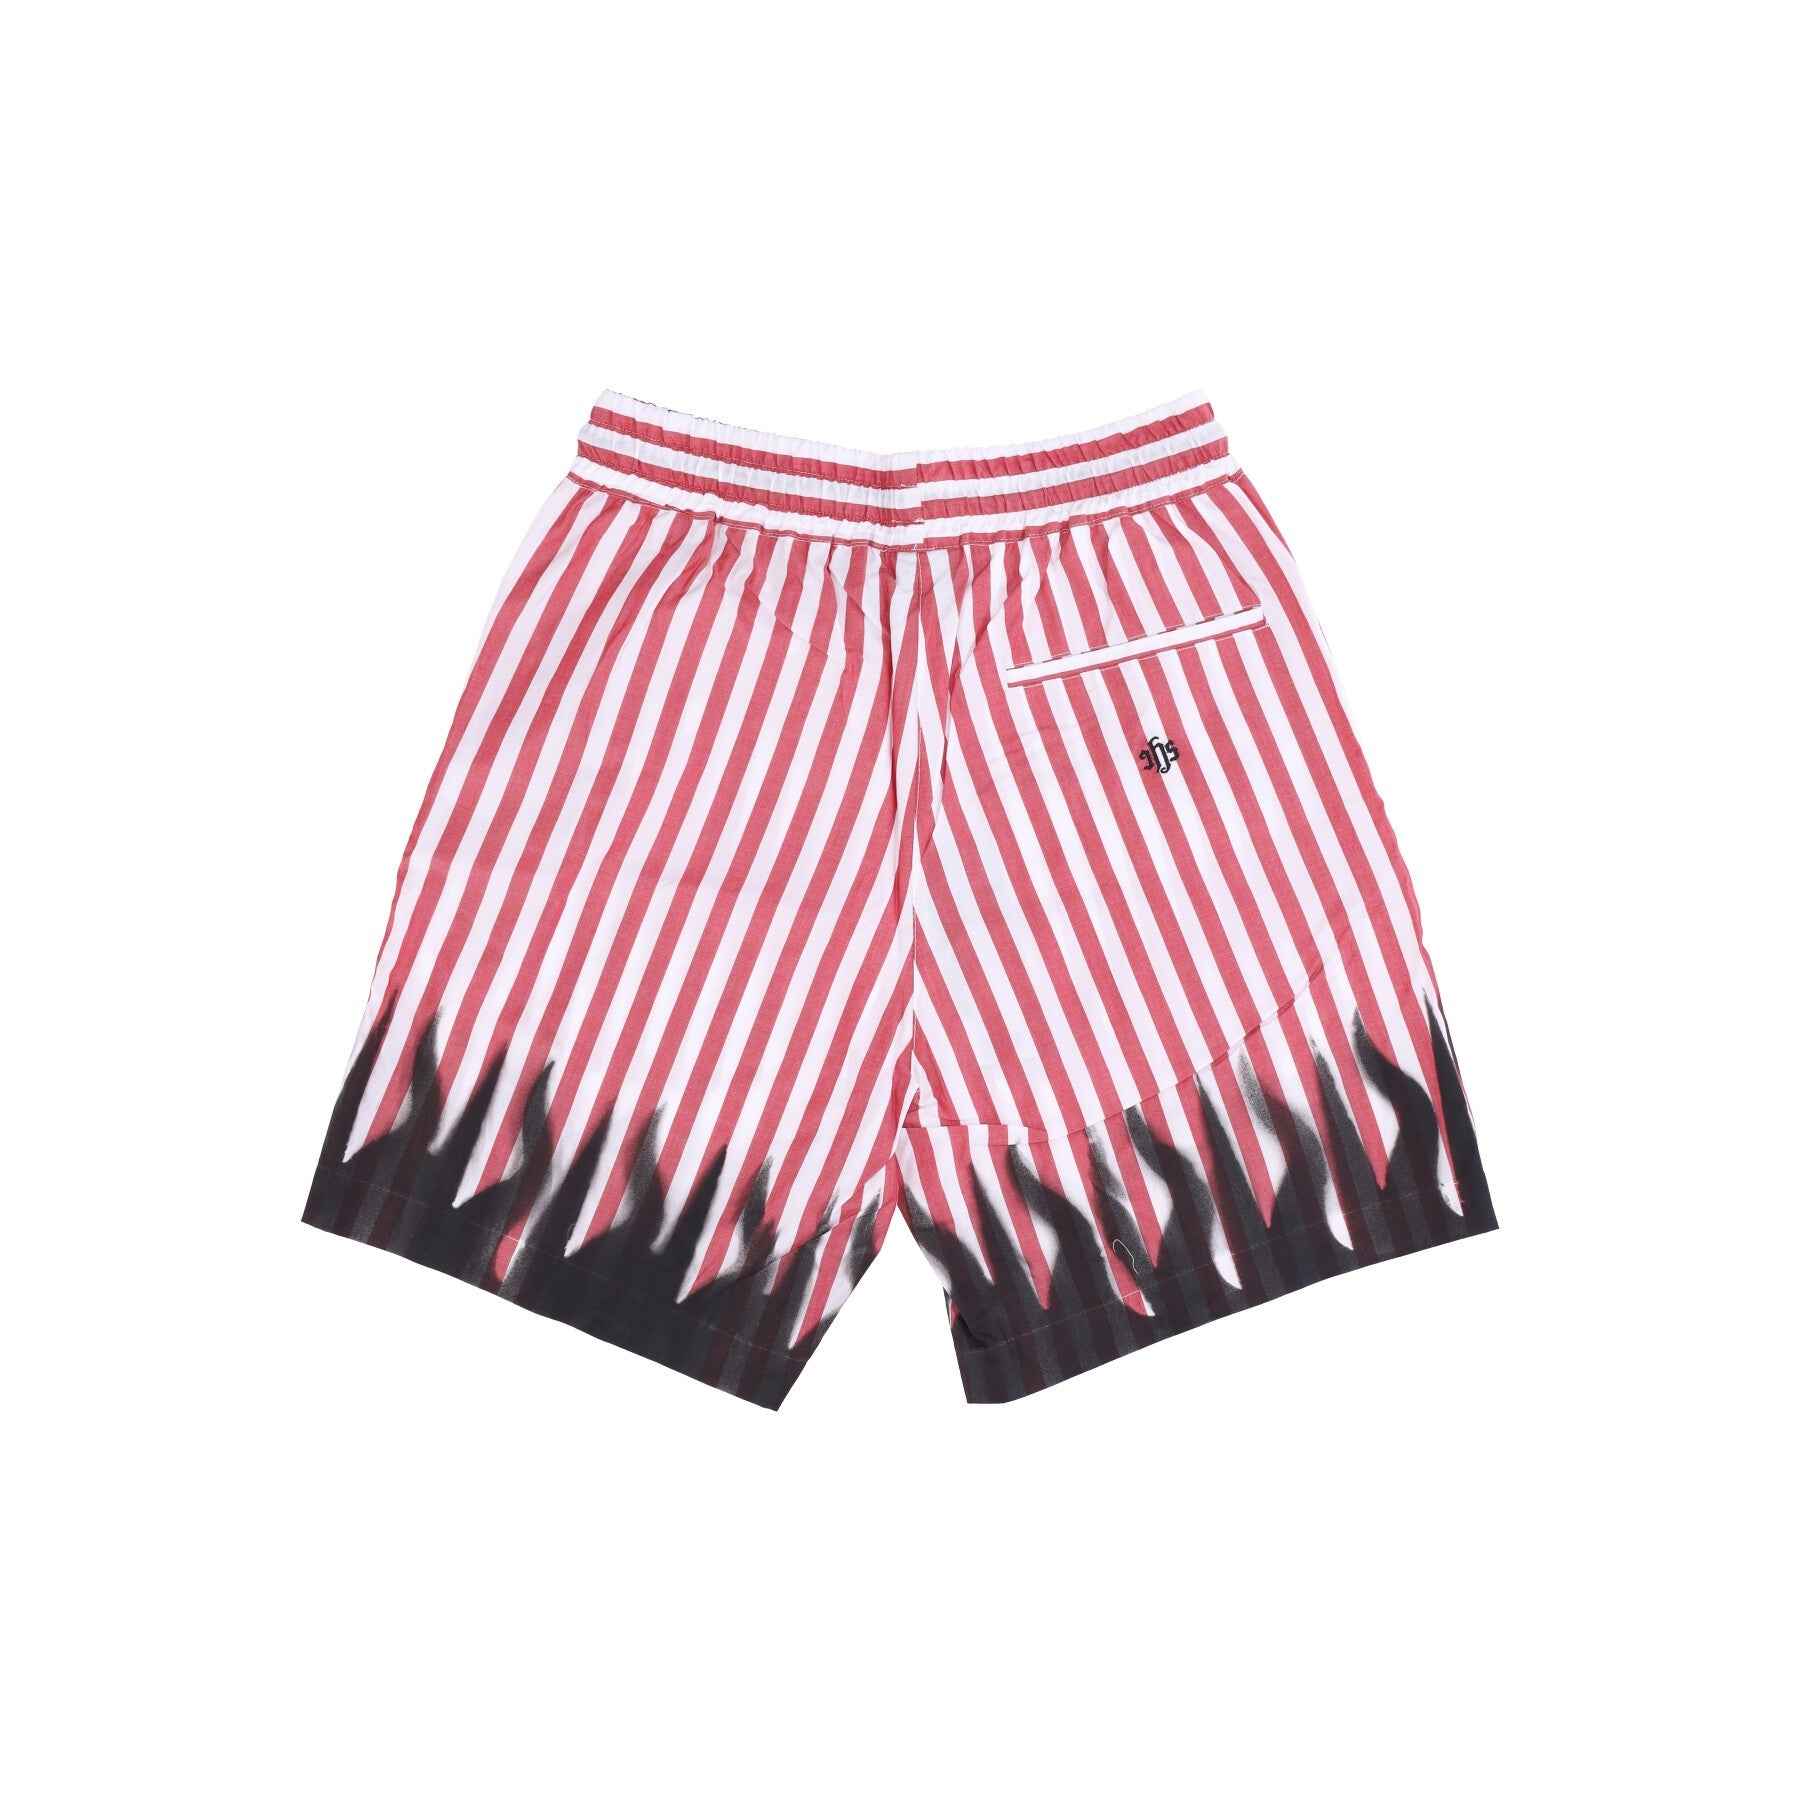 Ihs, Pantalone Corto Uomo Striped Short Pants, White/red